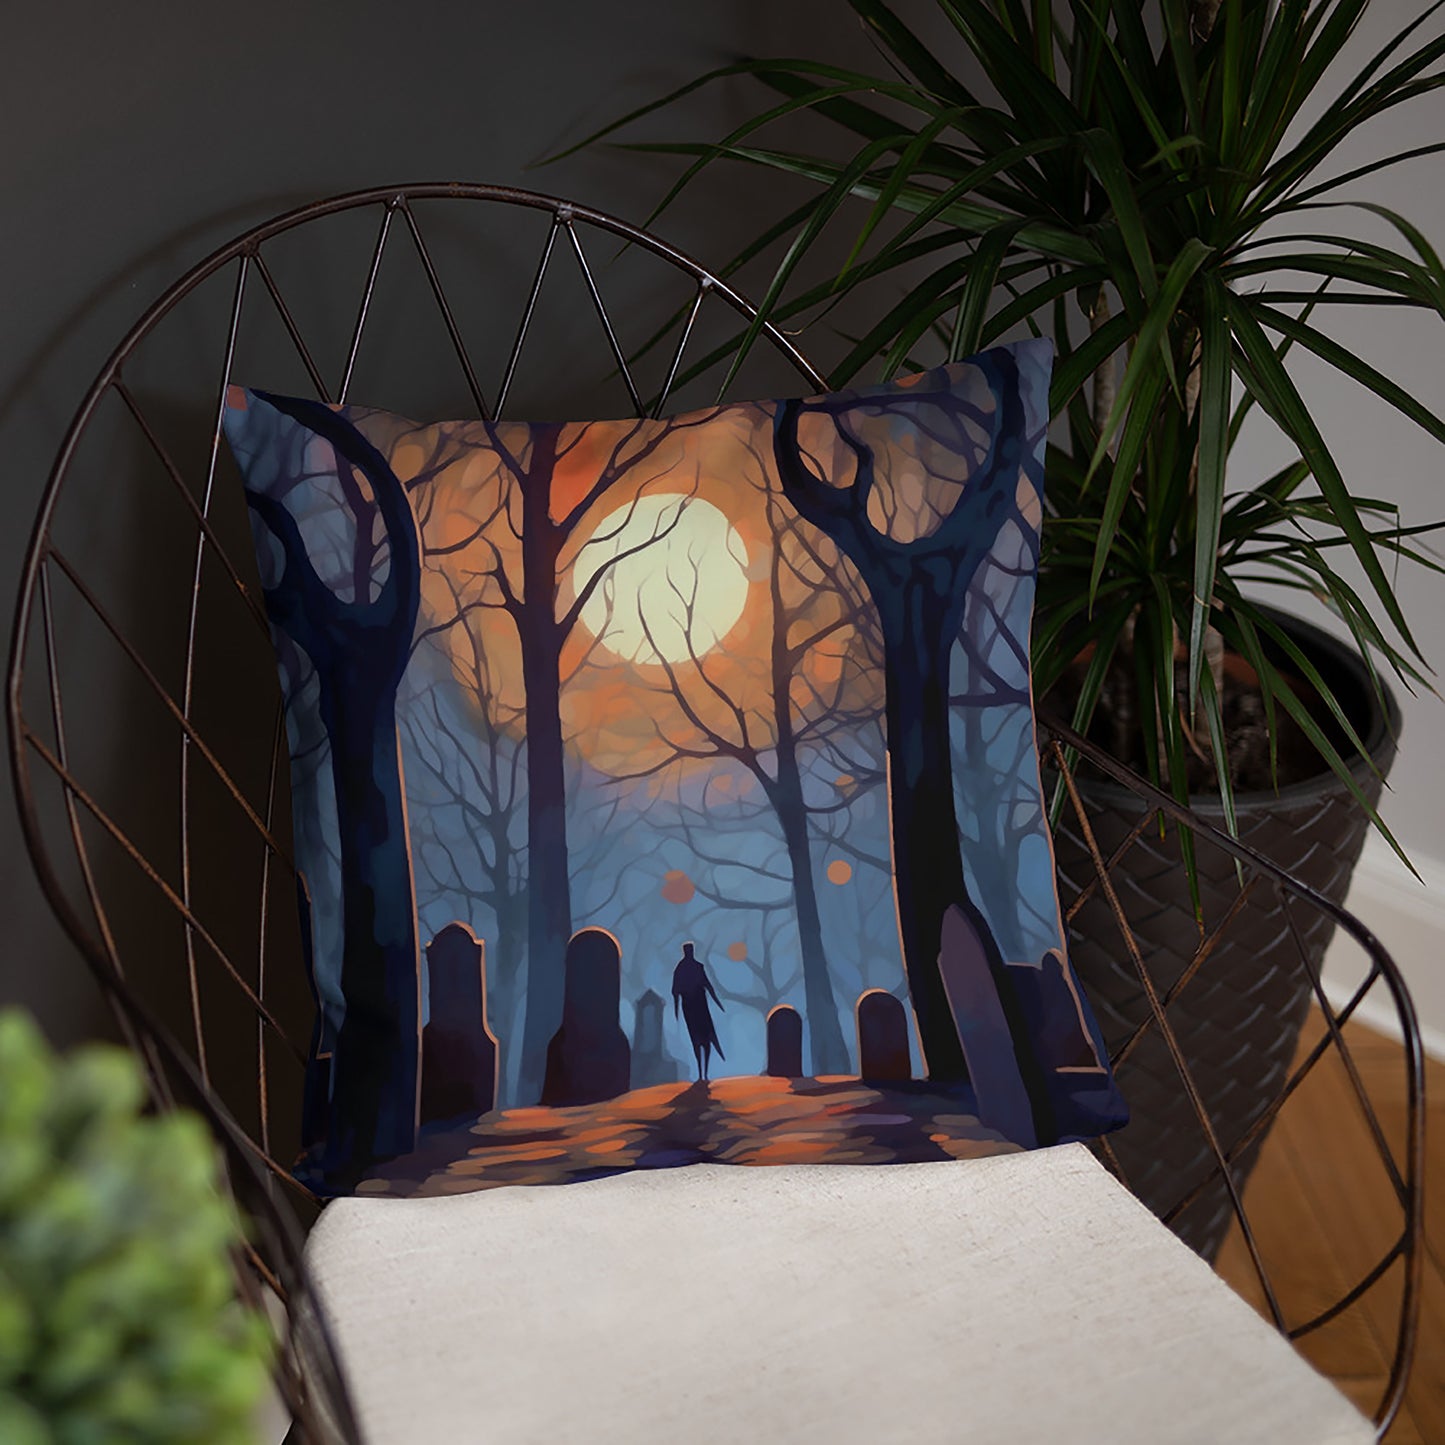 Halloween Throw Pillow Cemetery Art Polyester Decorative Cushion 18x18